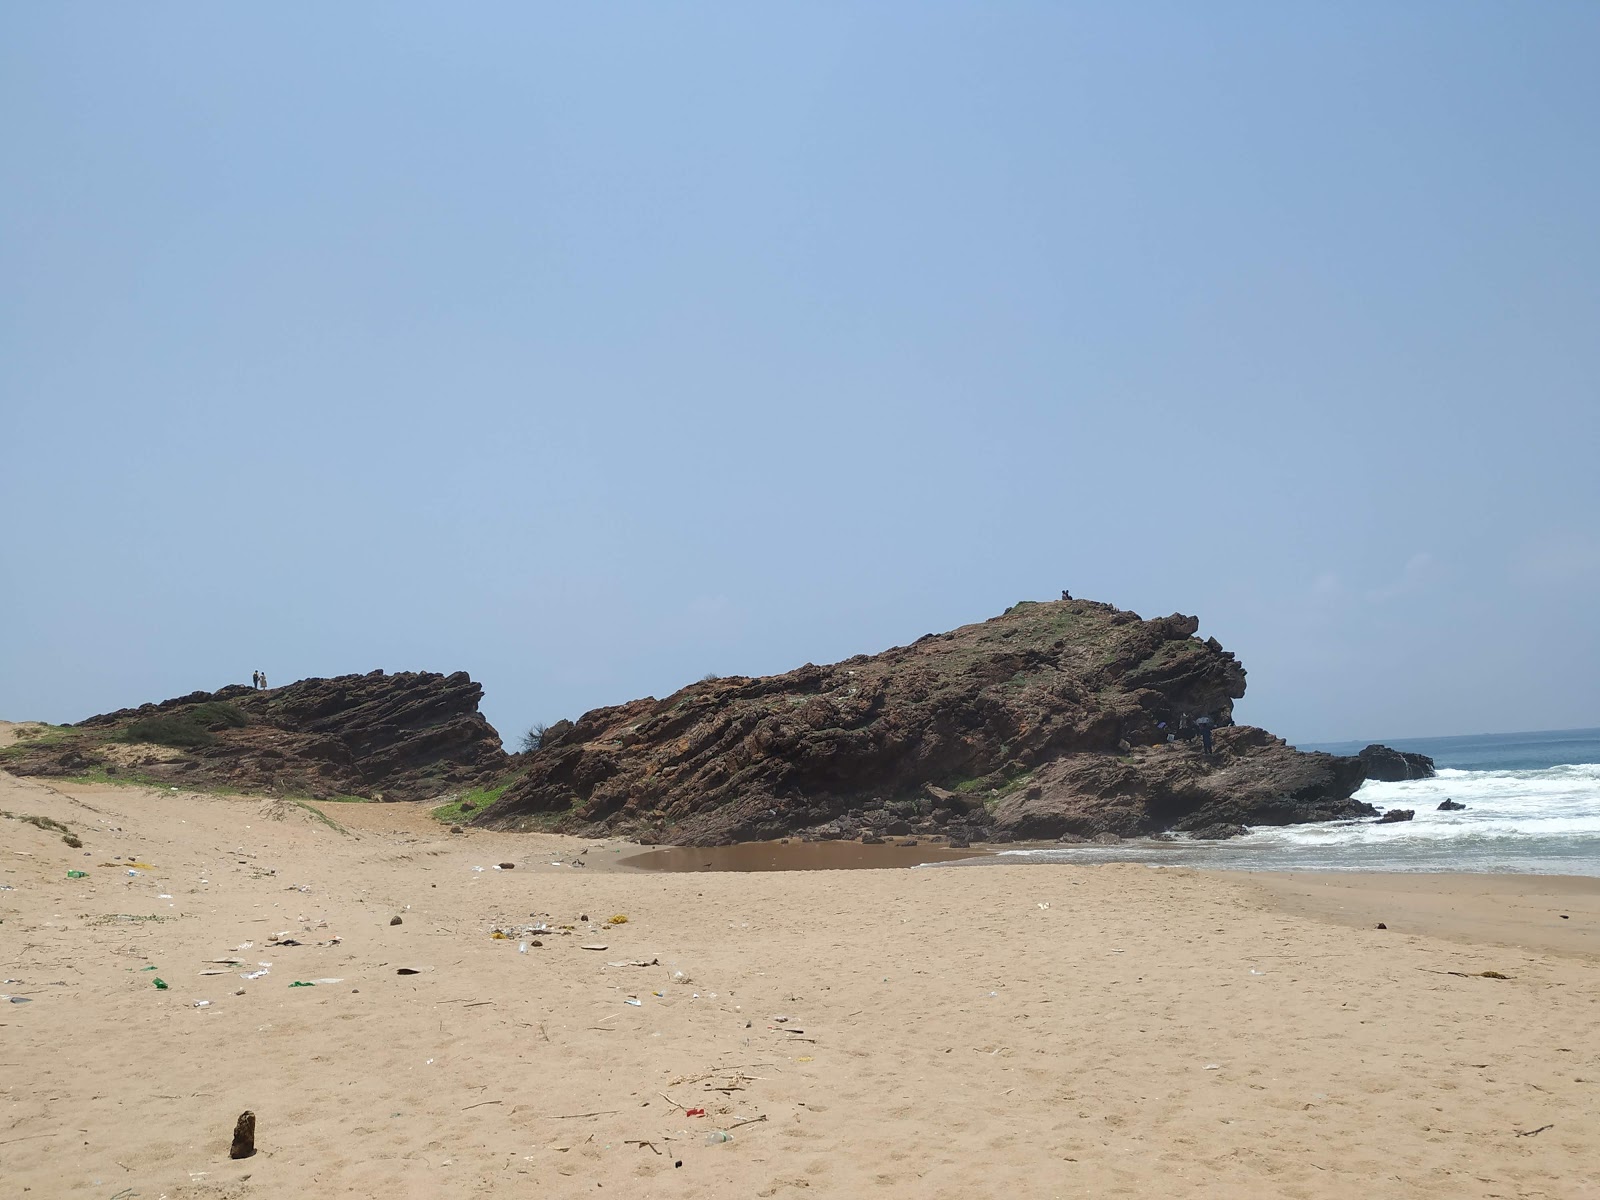 Foto de Thanthadi Beach - lugar popular entre os apreciadores de relaxamento